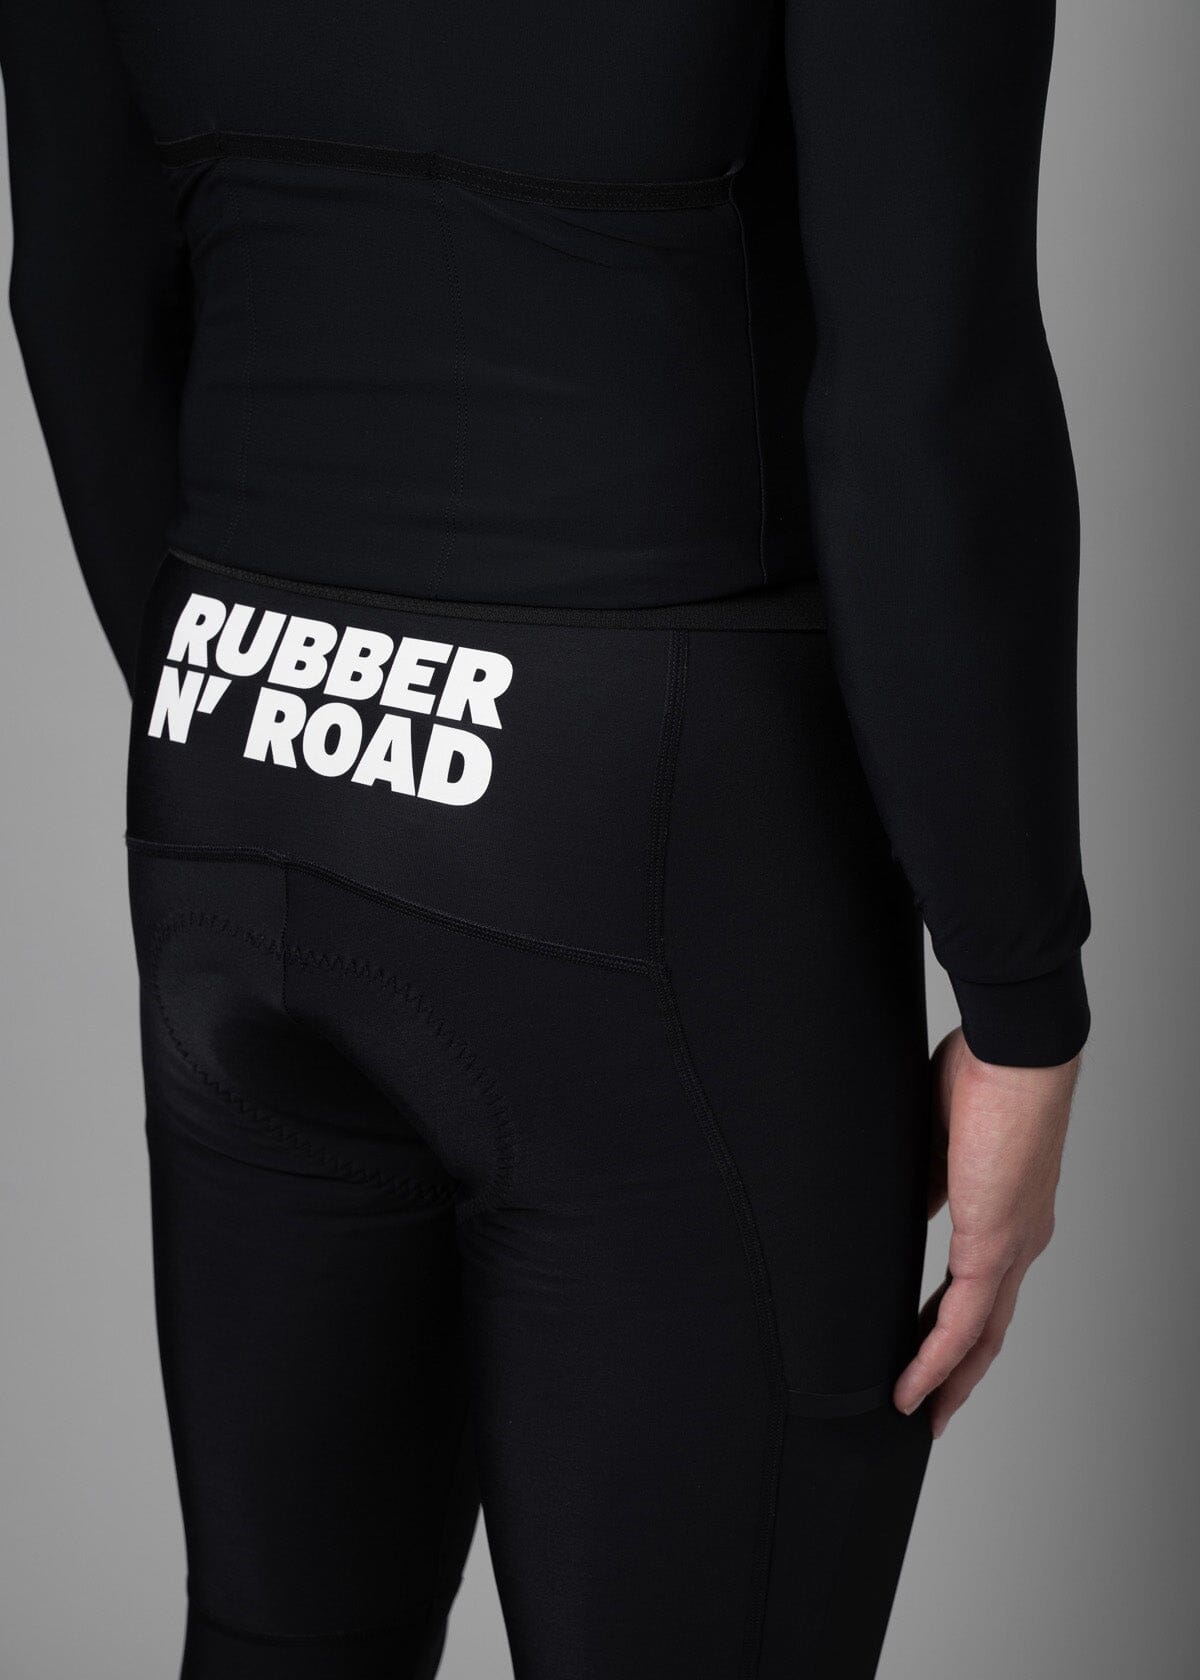 Rubber N' Road - Bib long Reverb Bibs Longs Rubber N' Road 